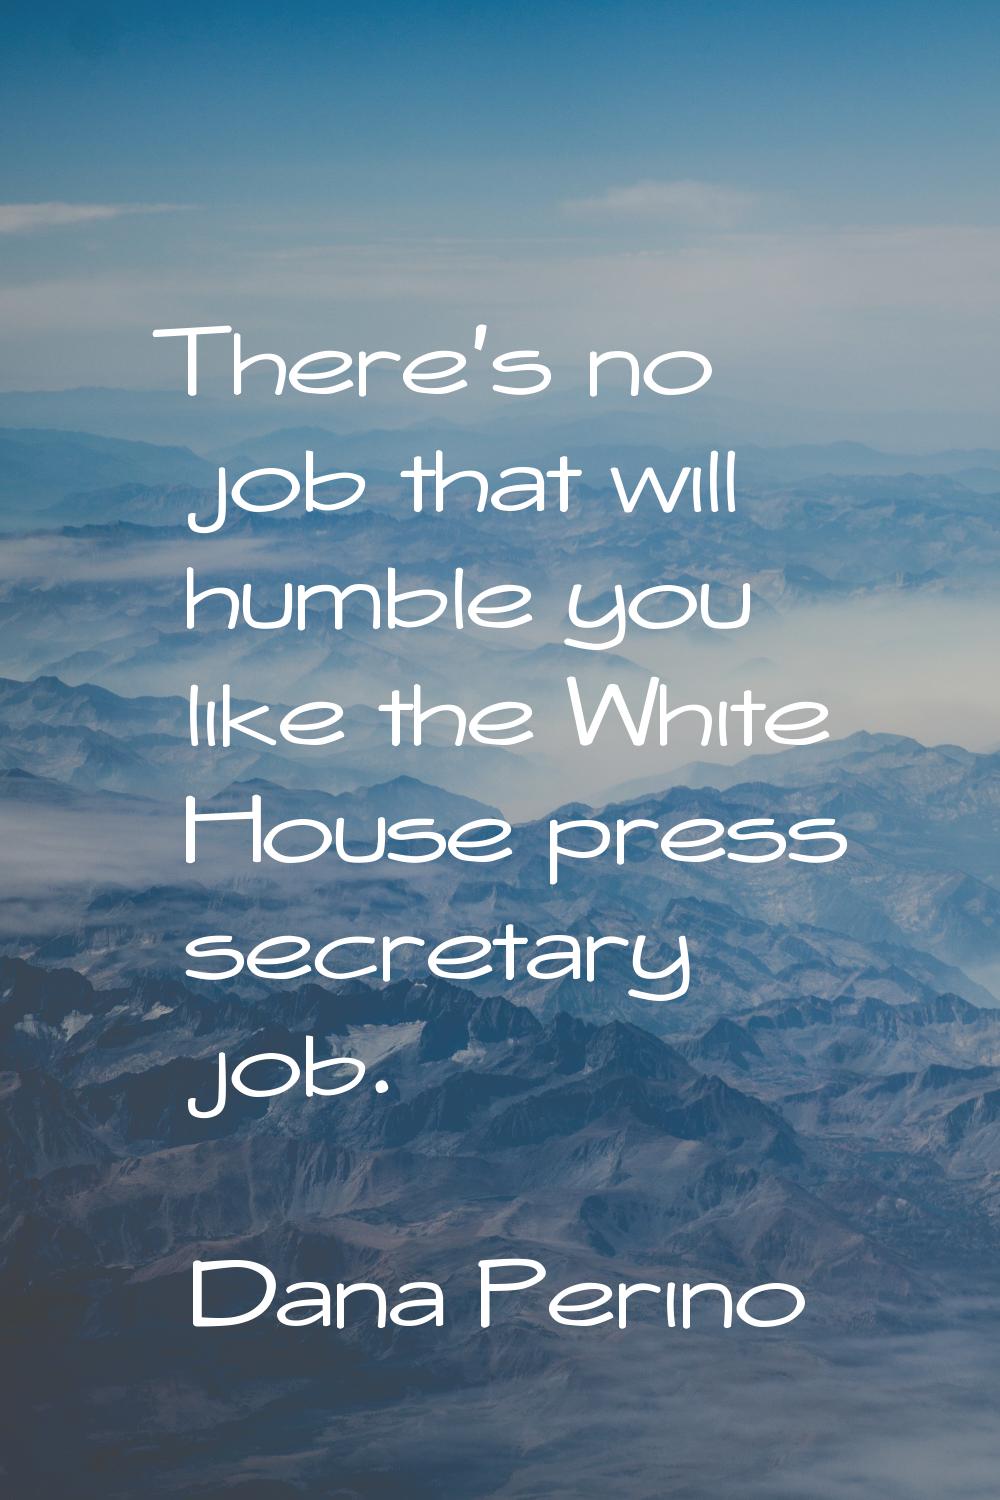 There's no job that will humble you like the White House press secretary job.